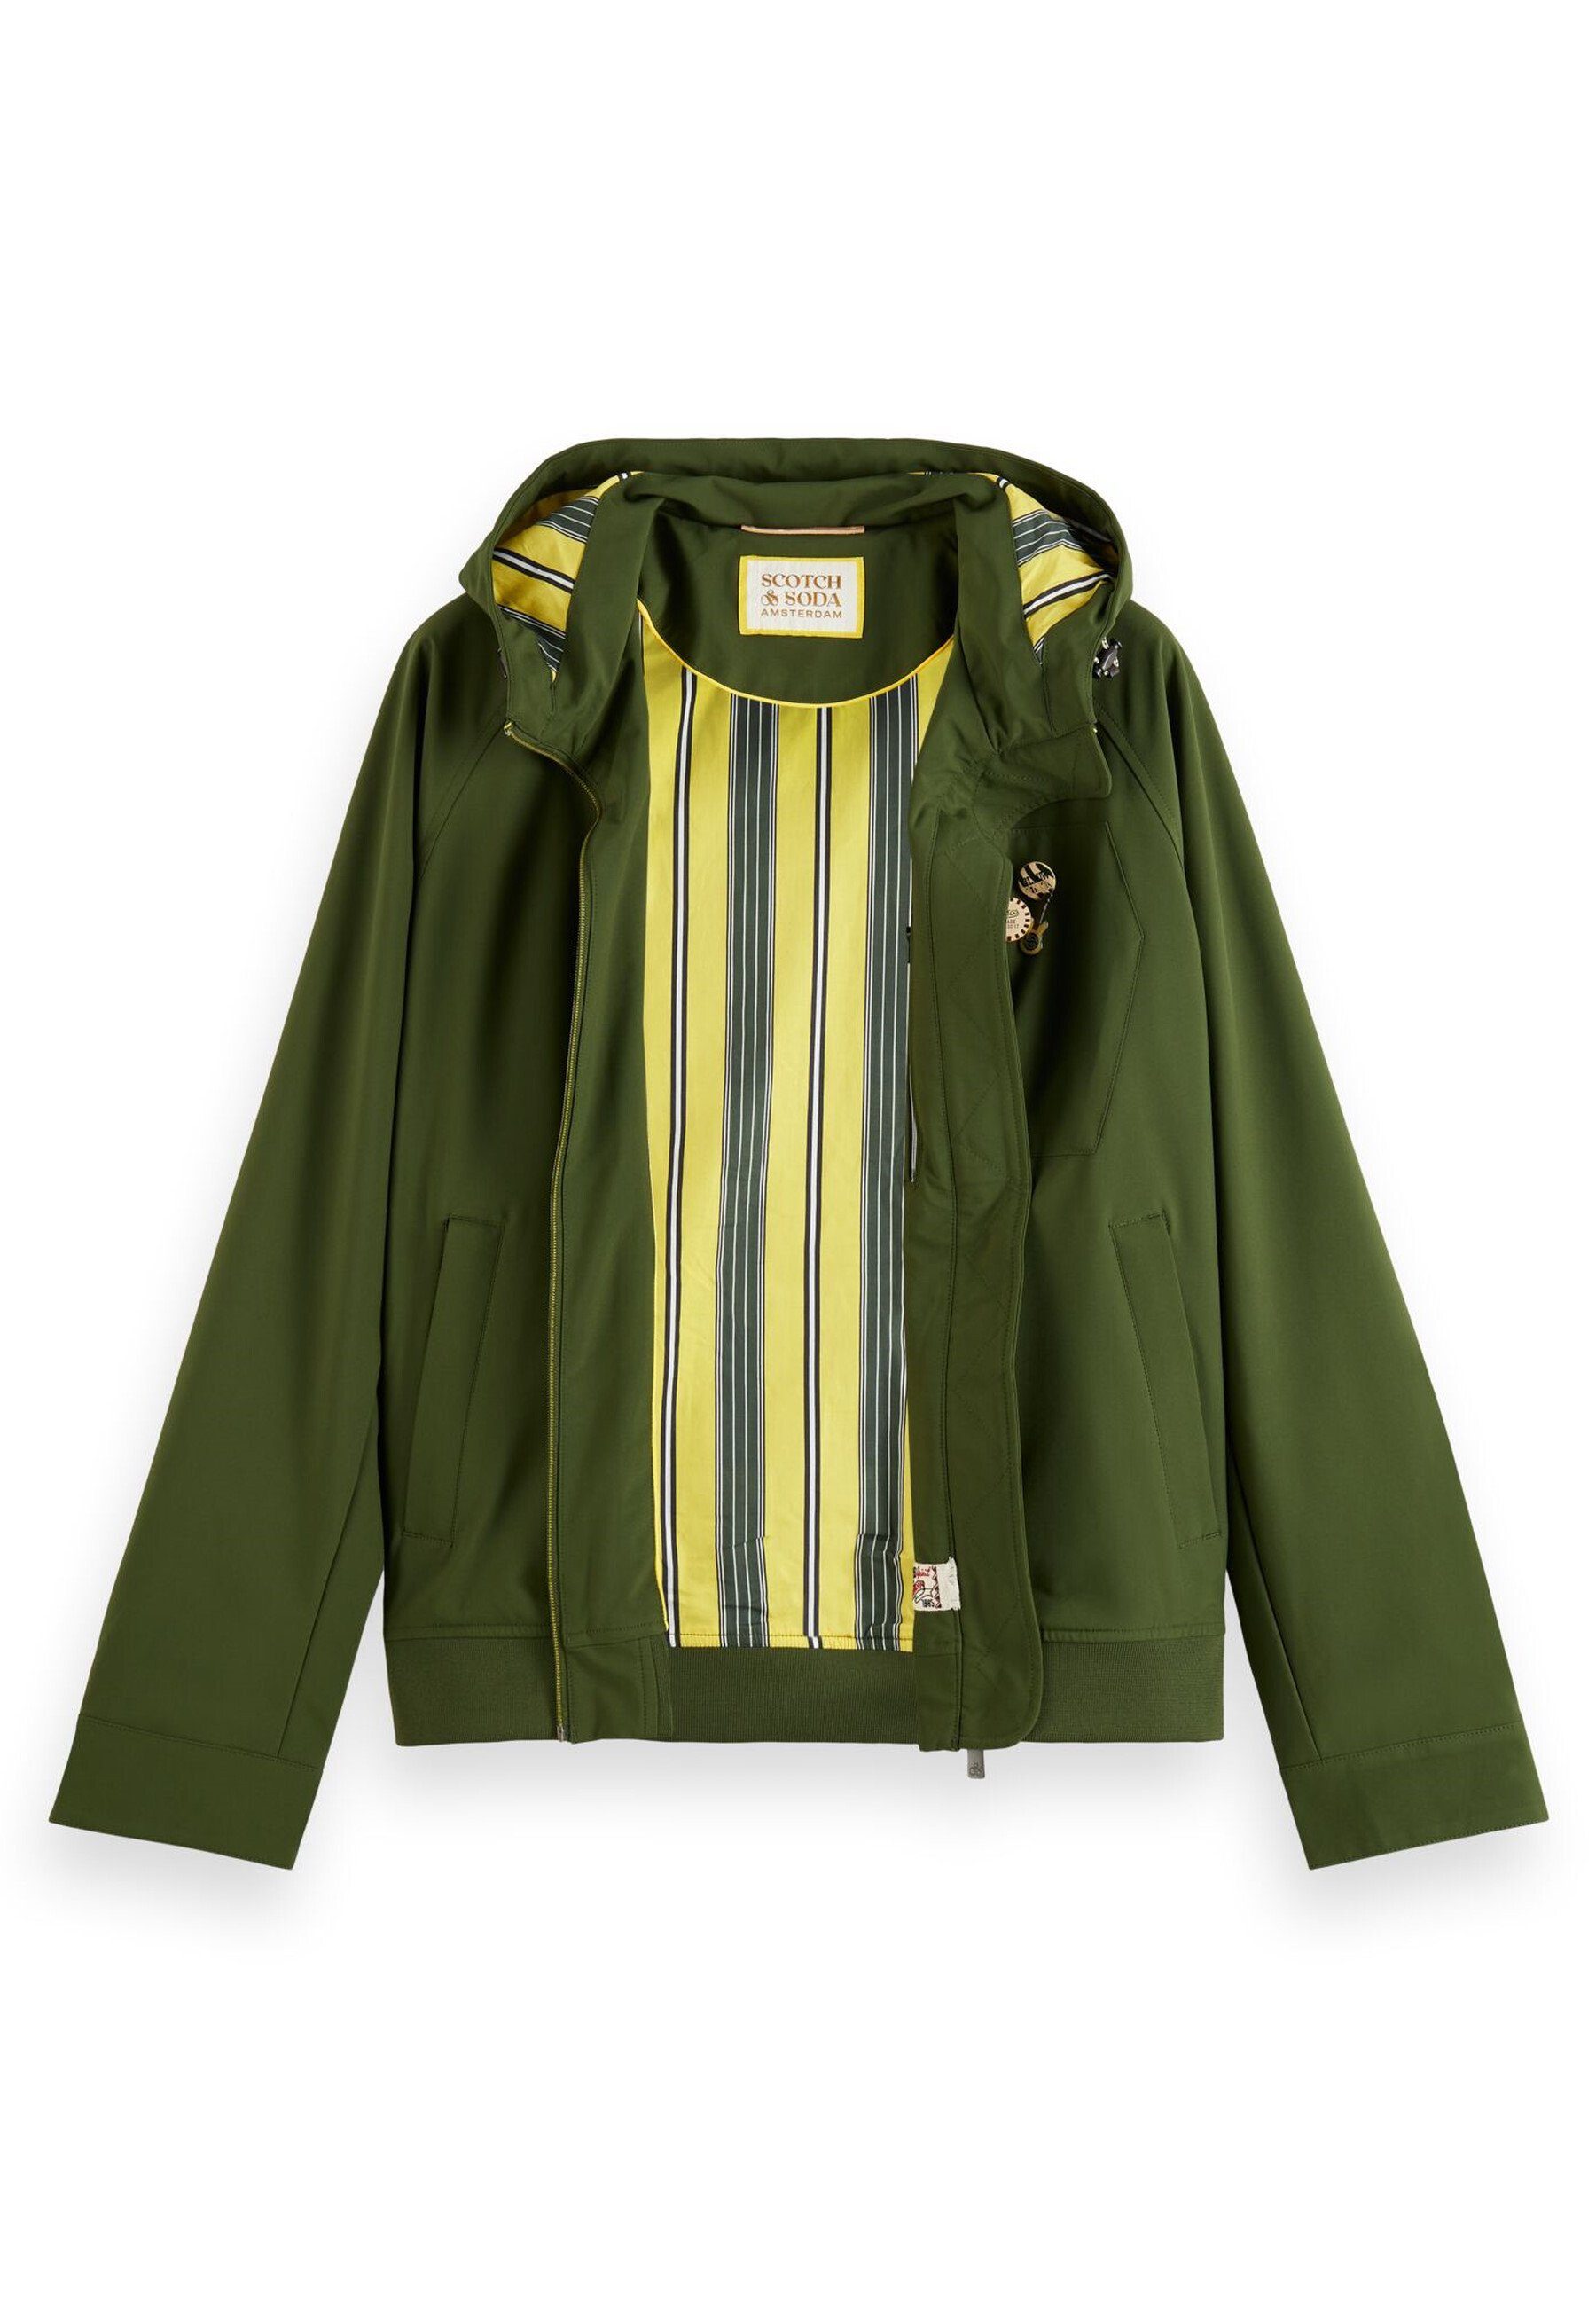 Scotch & Soda (1-St) hooded soft-shell Jacke jacket Classic mit Softshelljacke grün Kapuze